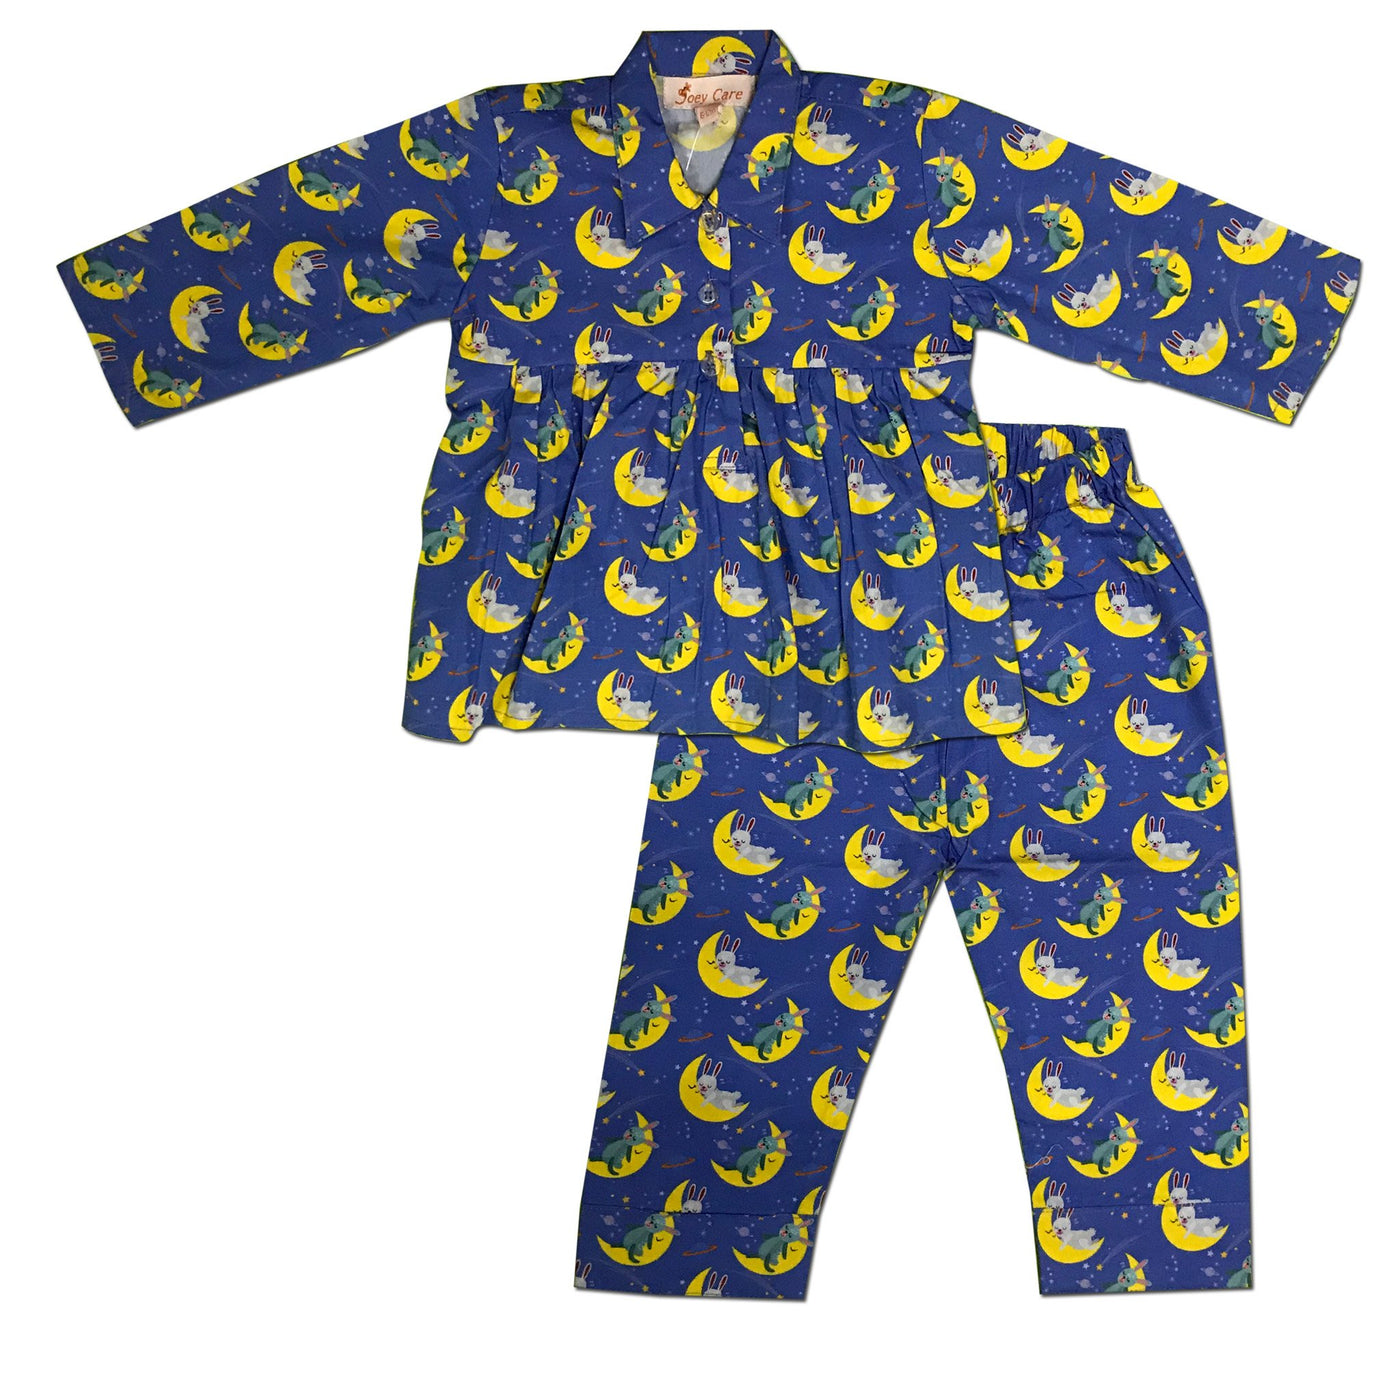 Pyjama set for Girls - Pleats Style Sleeping Bunny Joey Care